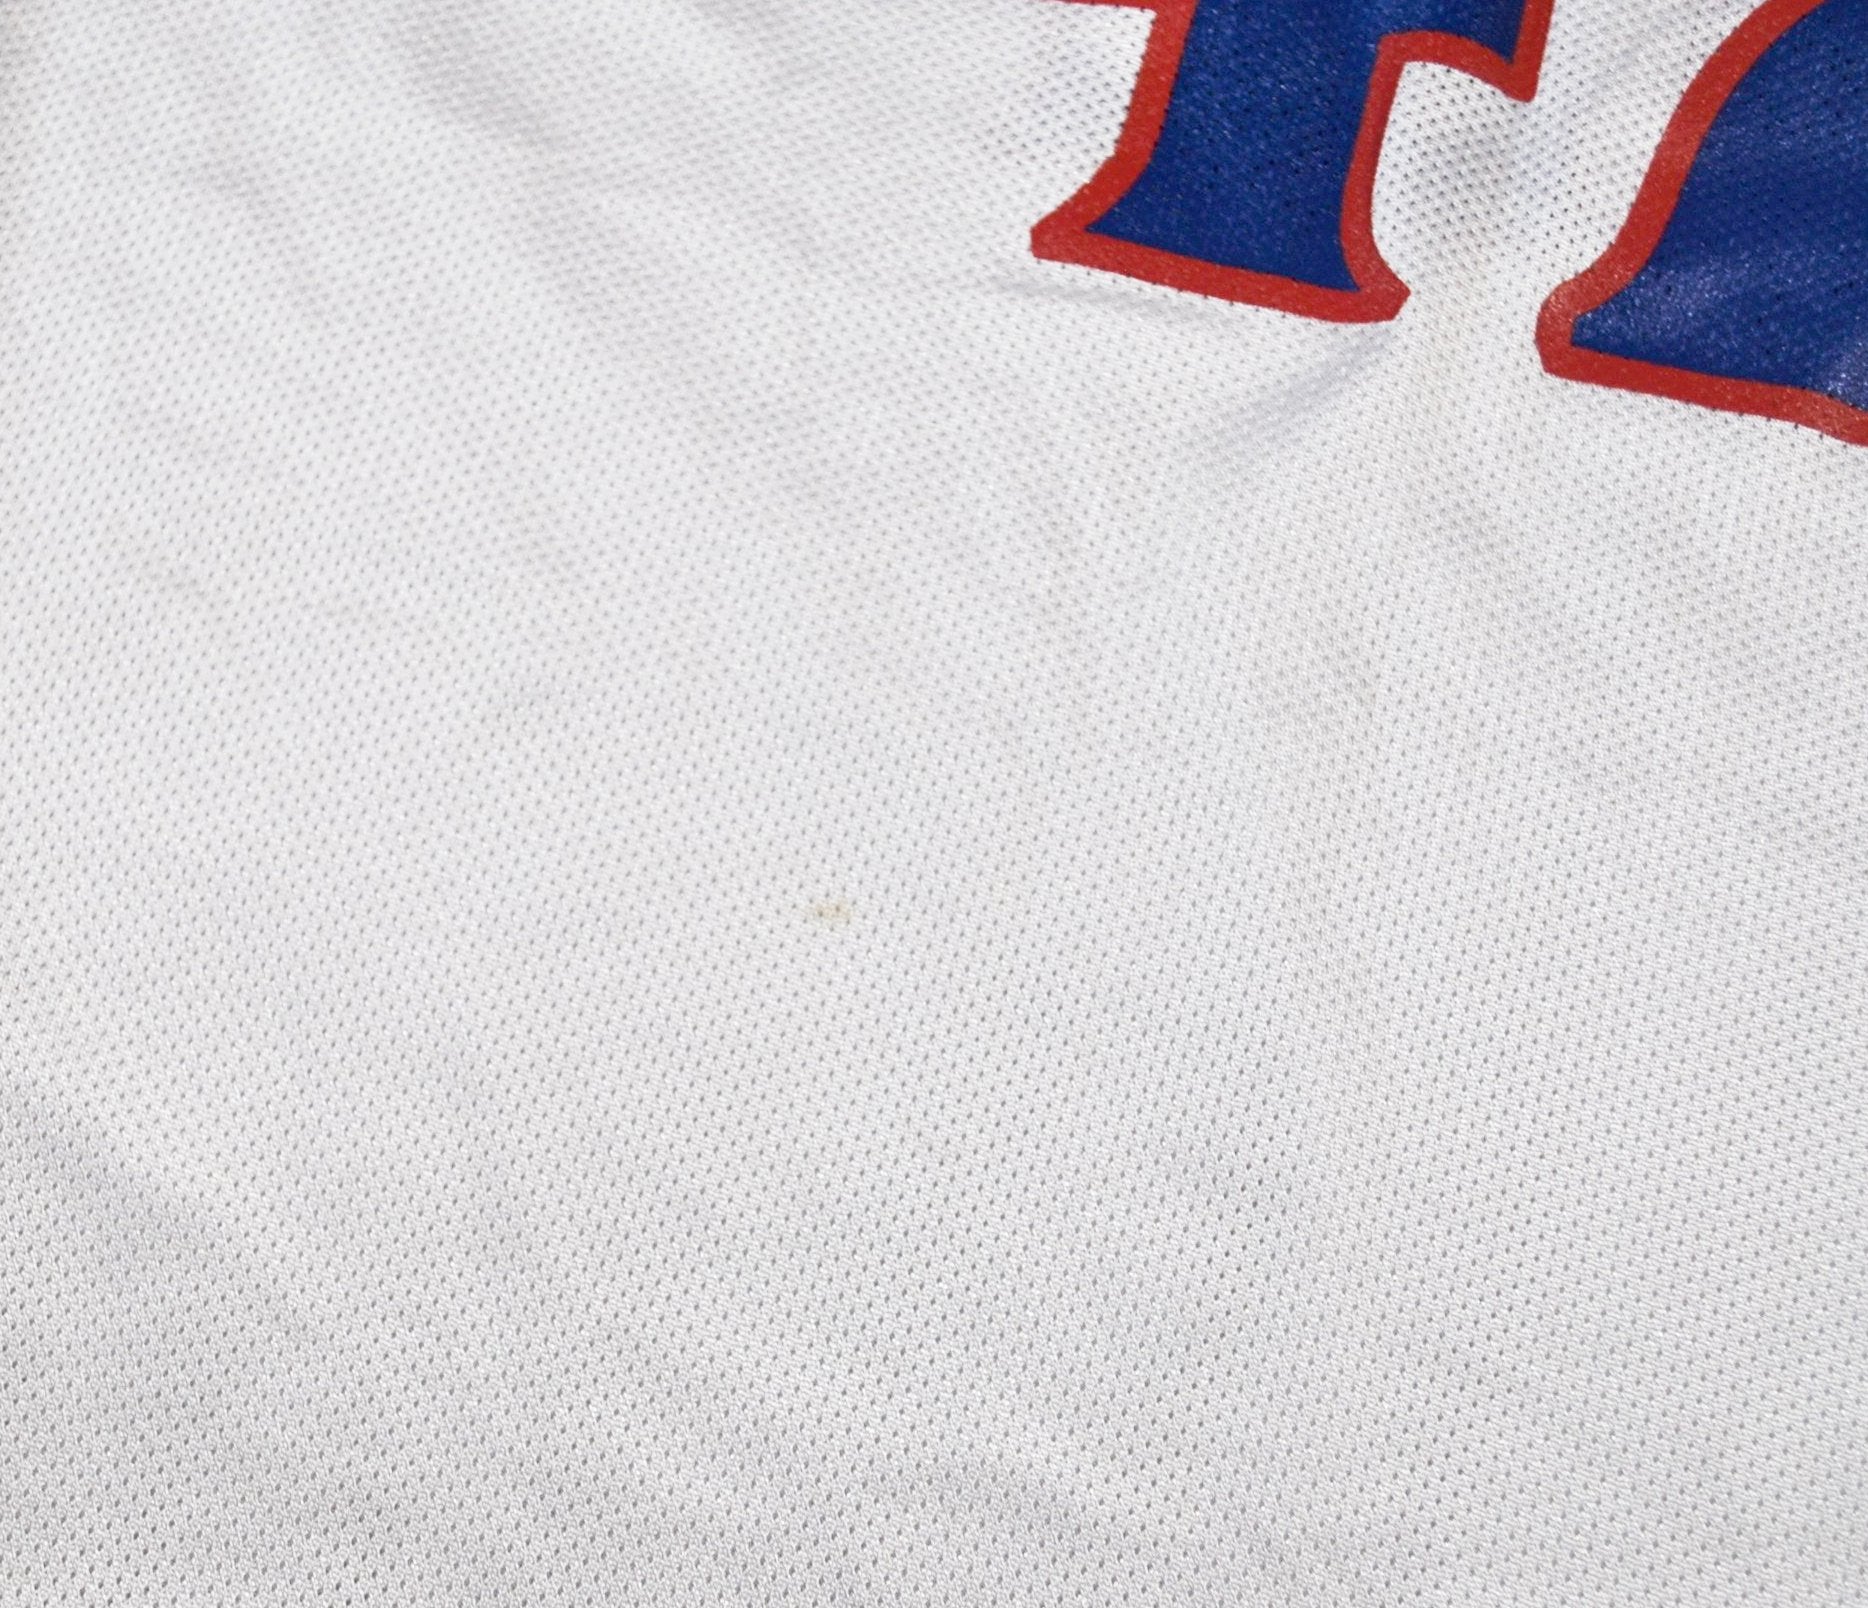 Vintage Jerry Stackhouse Philadelphia 76ers jersey mens size 48